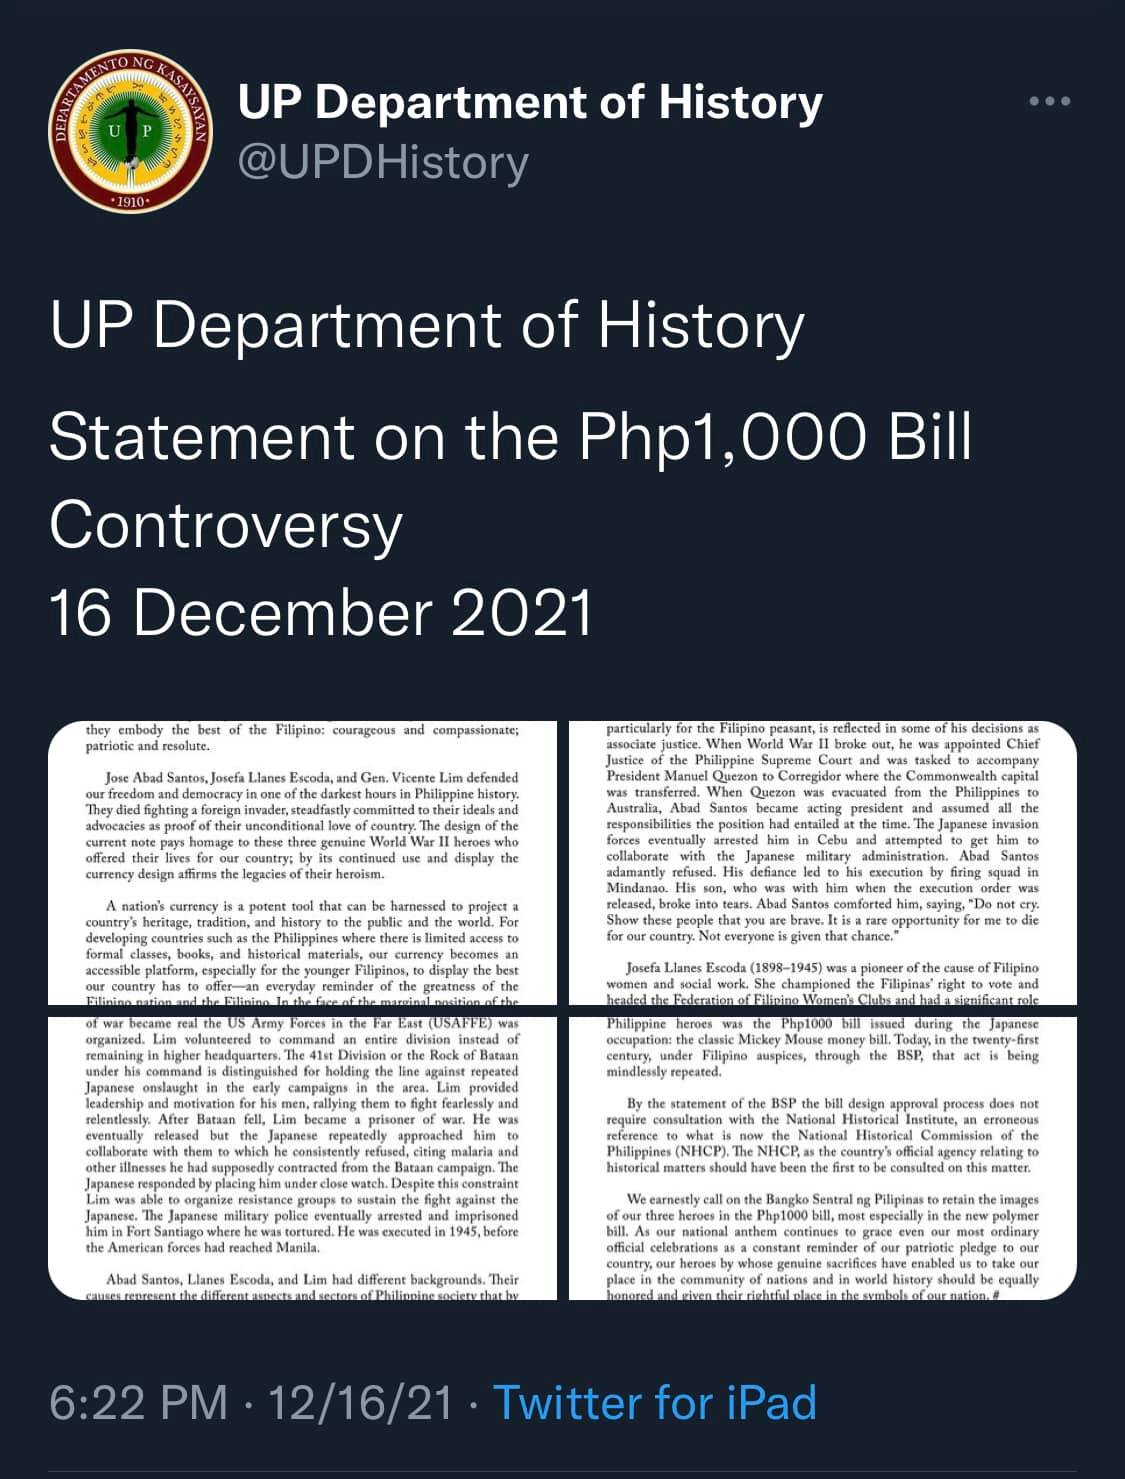 UP Department of History dismayed over BSP P1,000 Bill Redesign